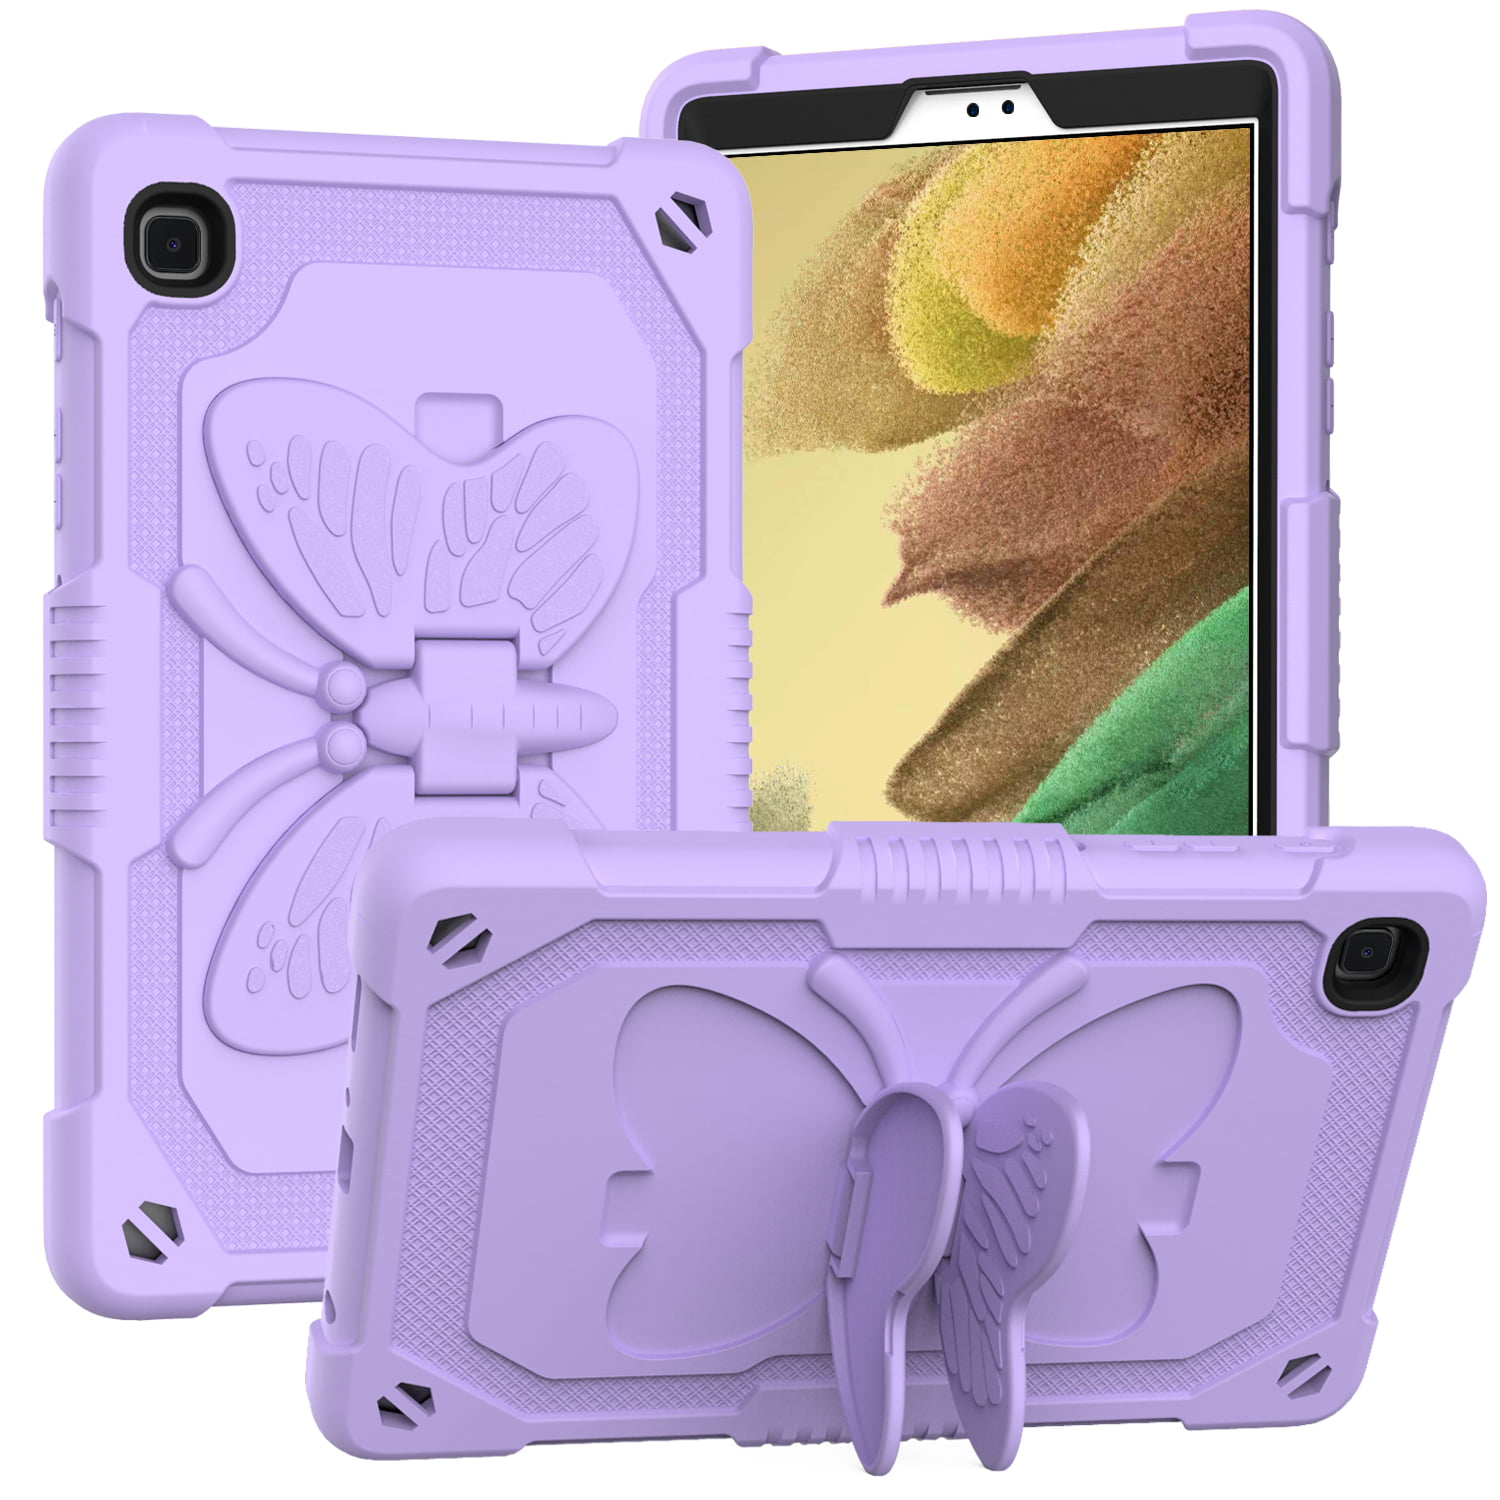 Housse XEPTIO New iPad 9,7 2018 Etui rotatif violet